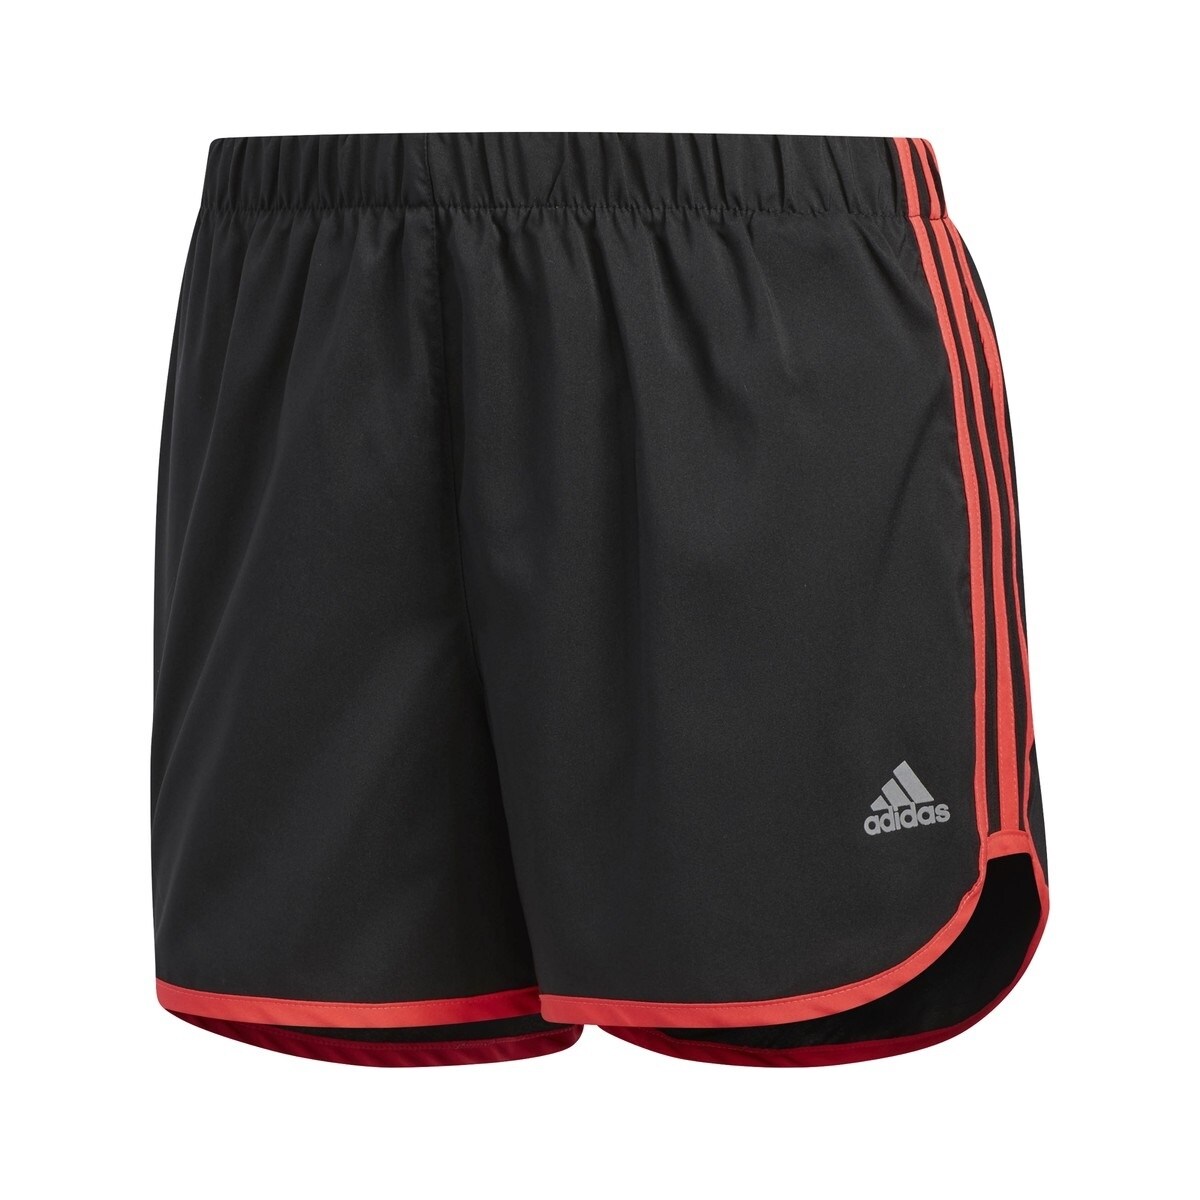 red adidas running shorts